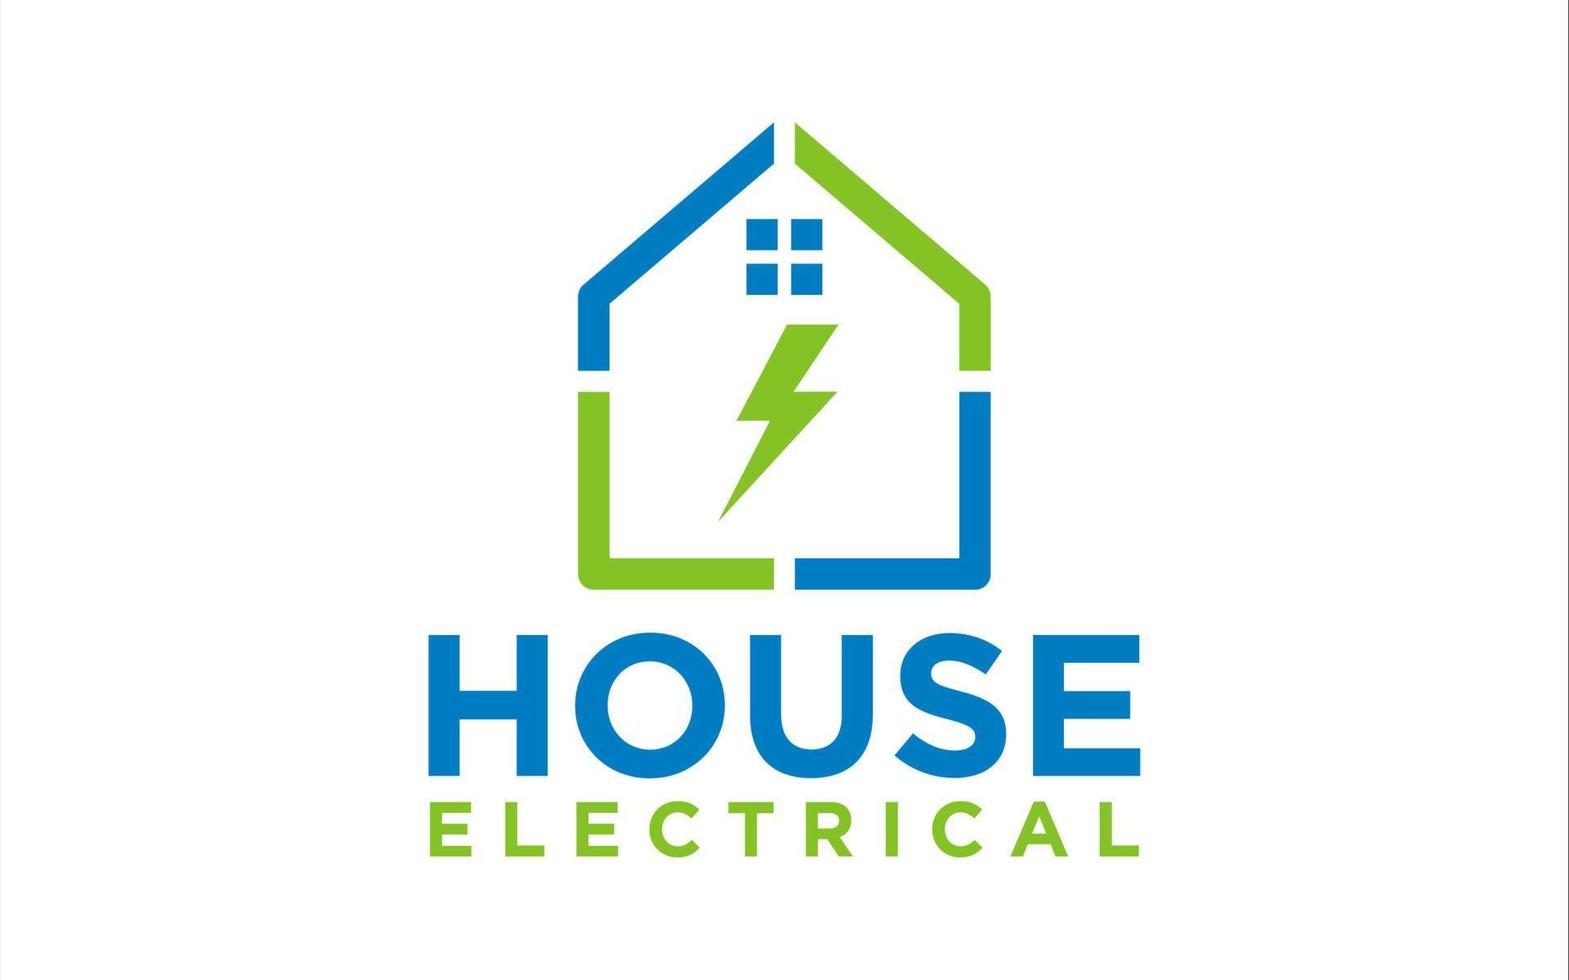 Elektrohaus-Logo, Power-Elektrohaus-Logo-Vorlage vektor